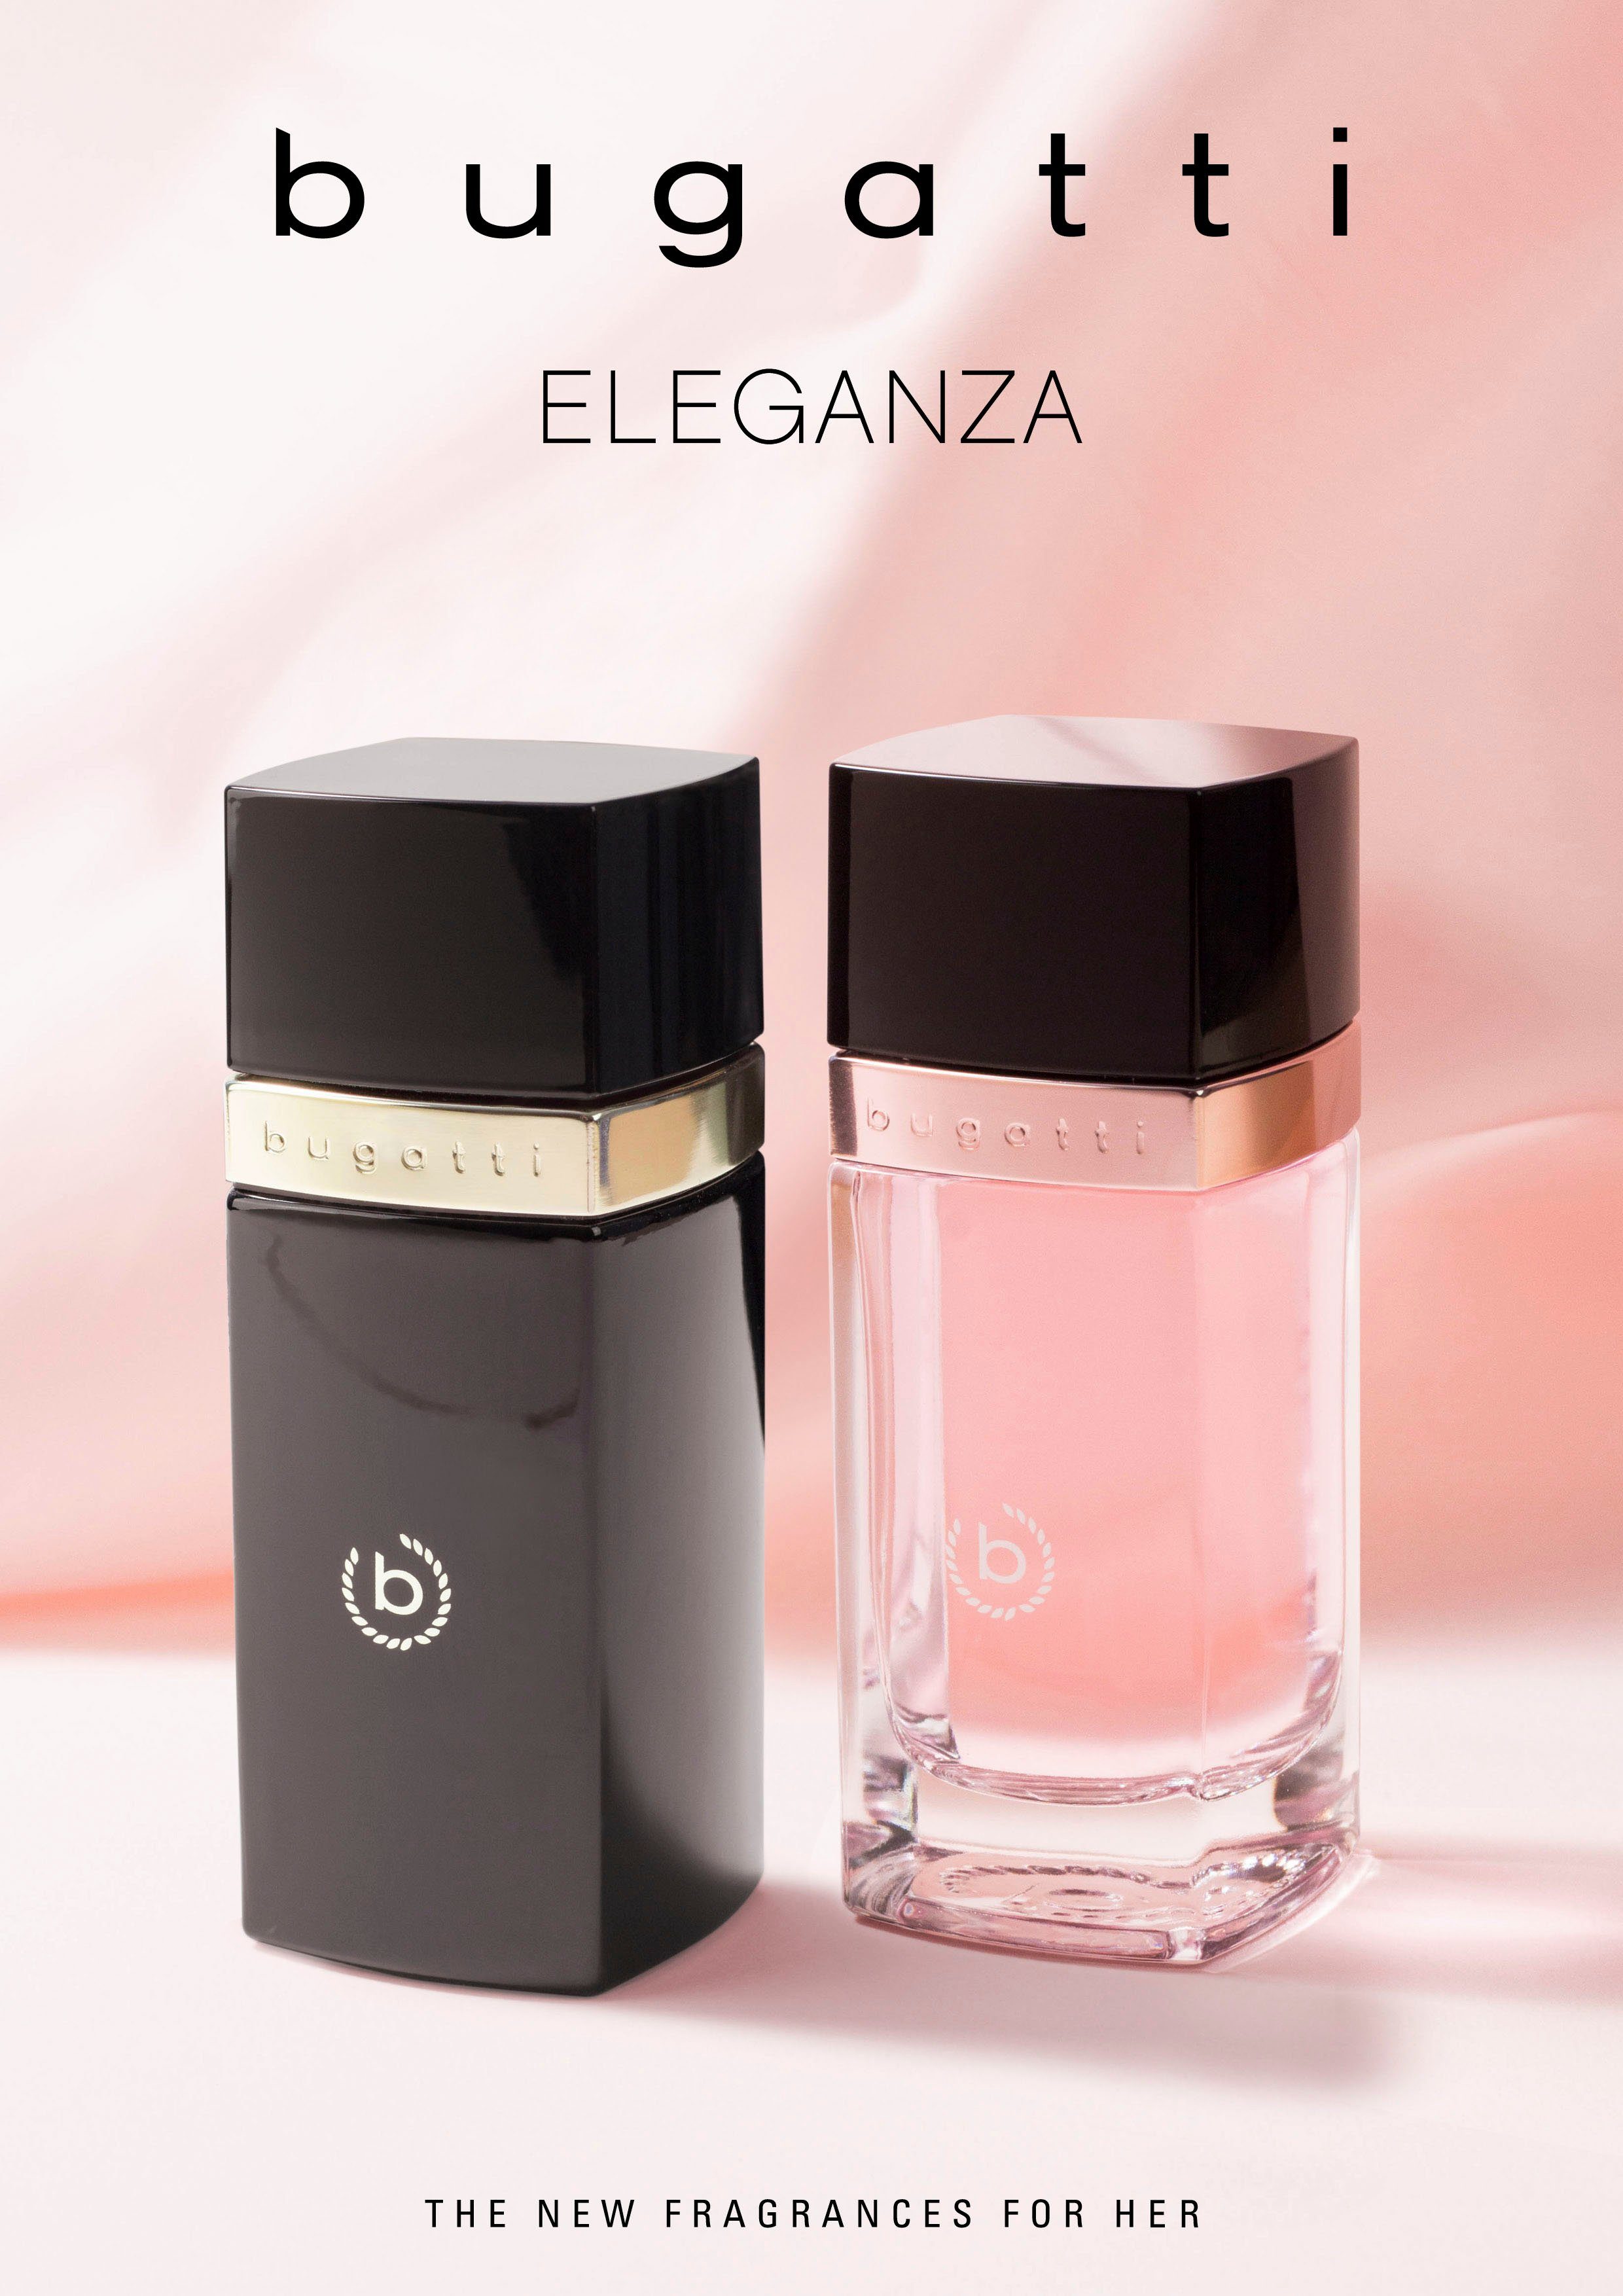 bugatti Eau de Parfum Eleganza ml 60 EdP